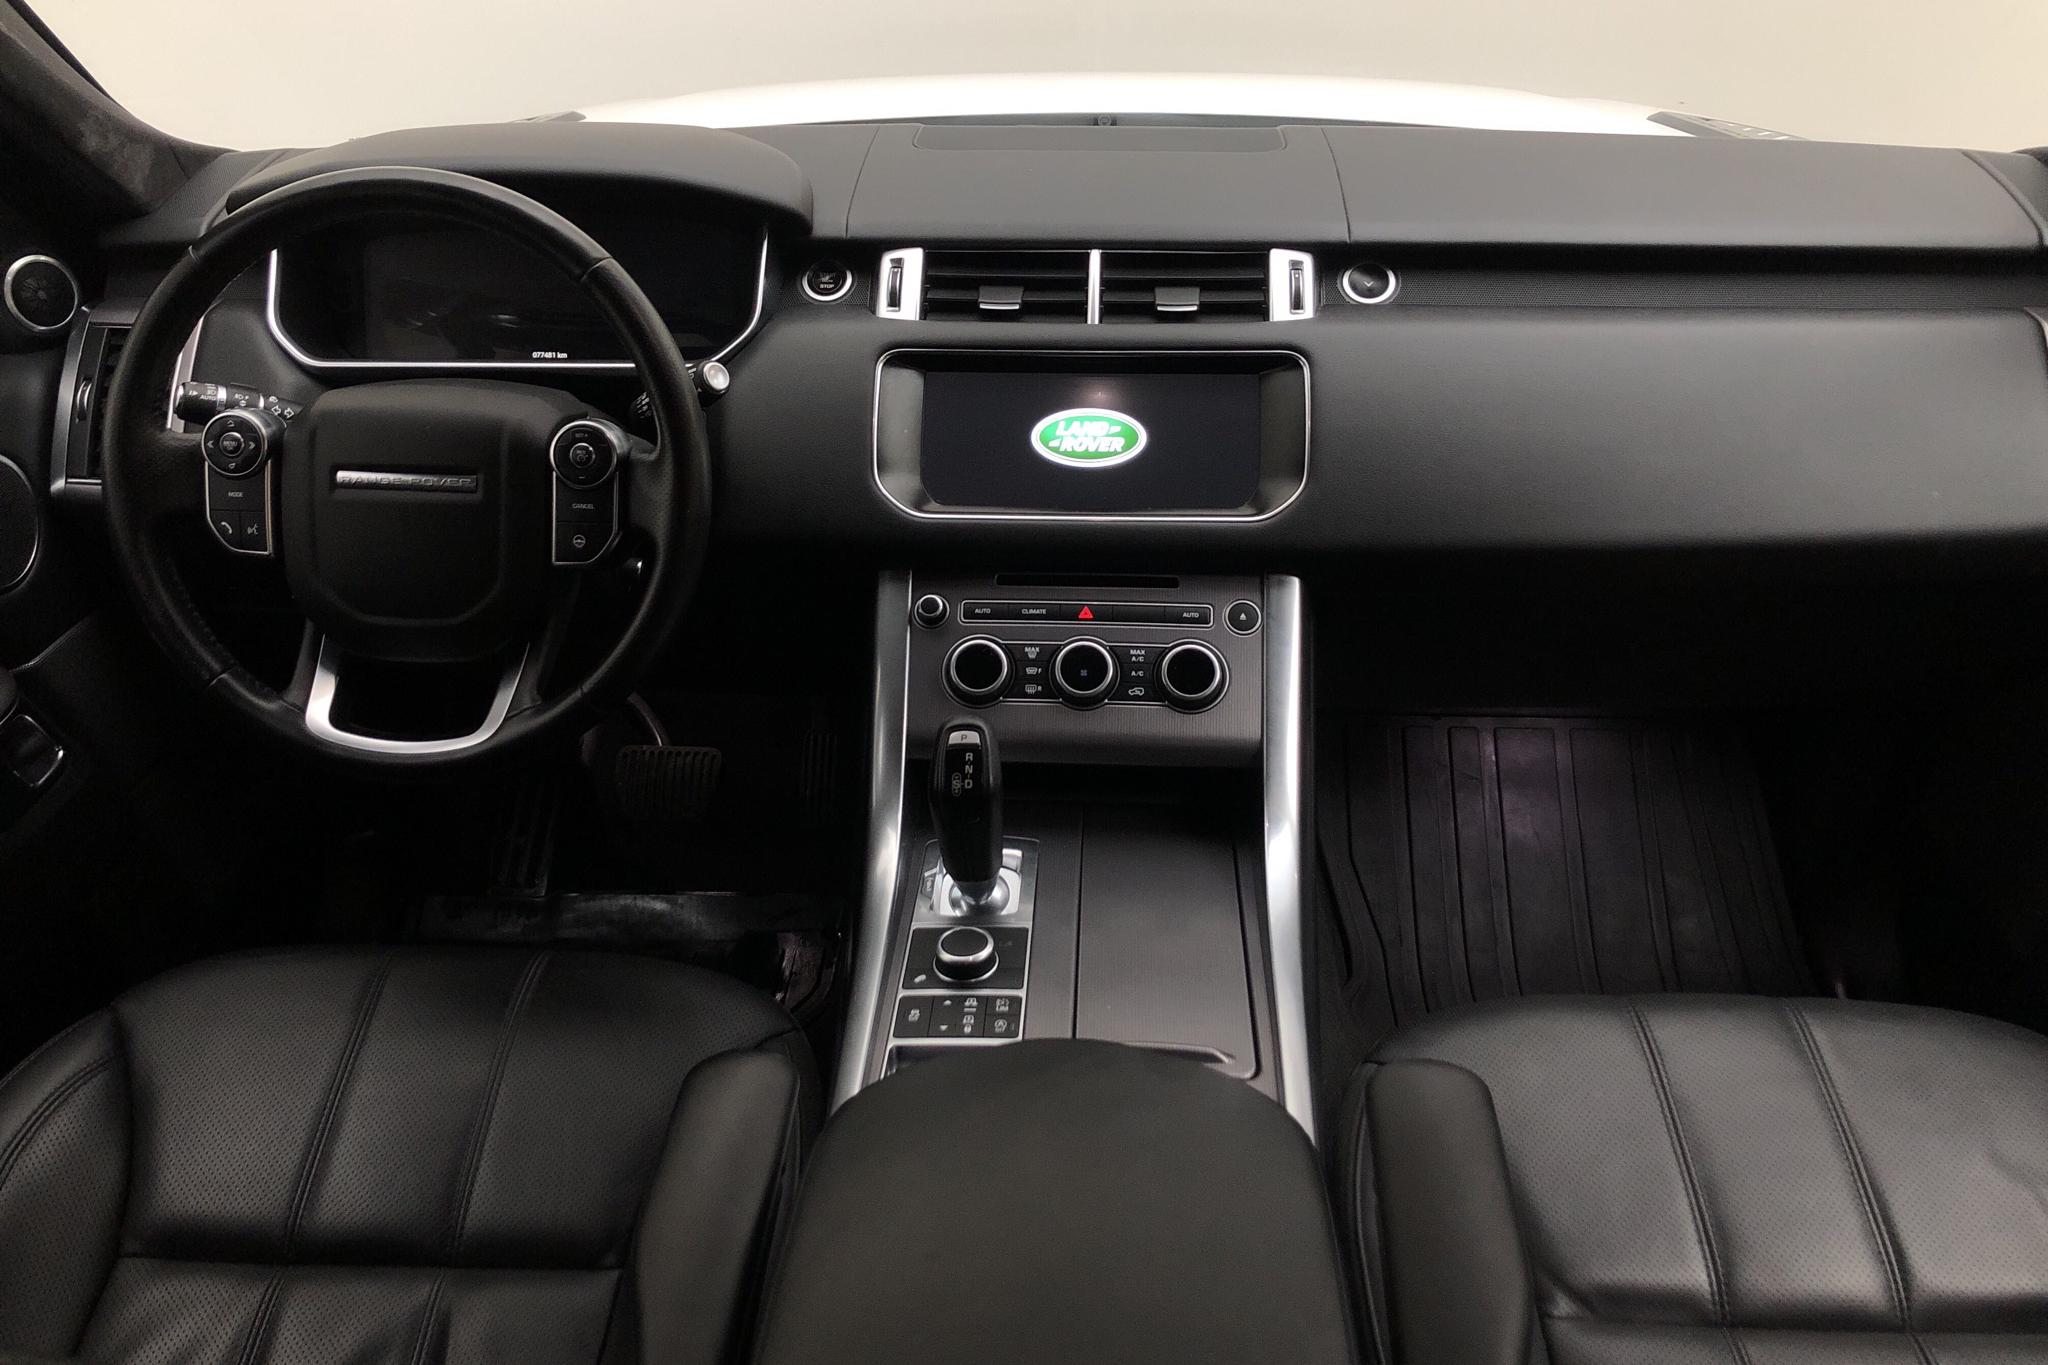 Land Rover Range Rover Sport 3.0 TDV6 (258hk) - 77 480 km - Automatic - white - 2017